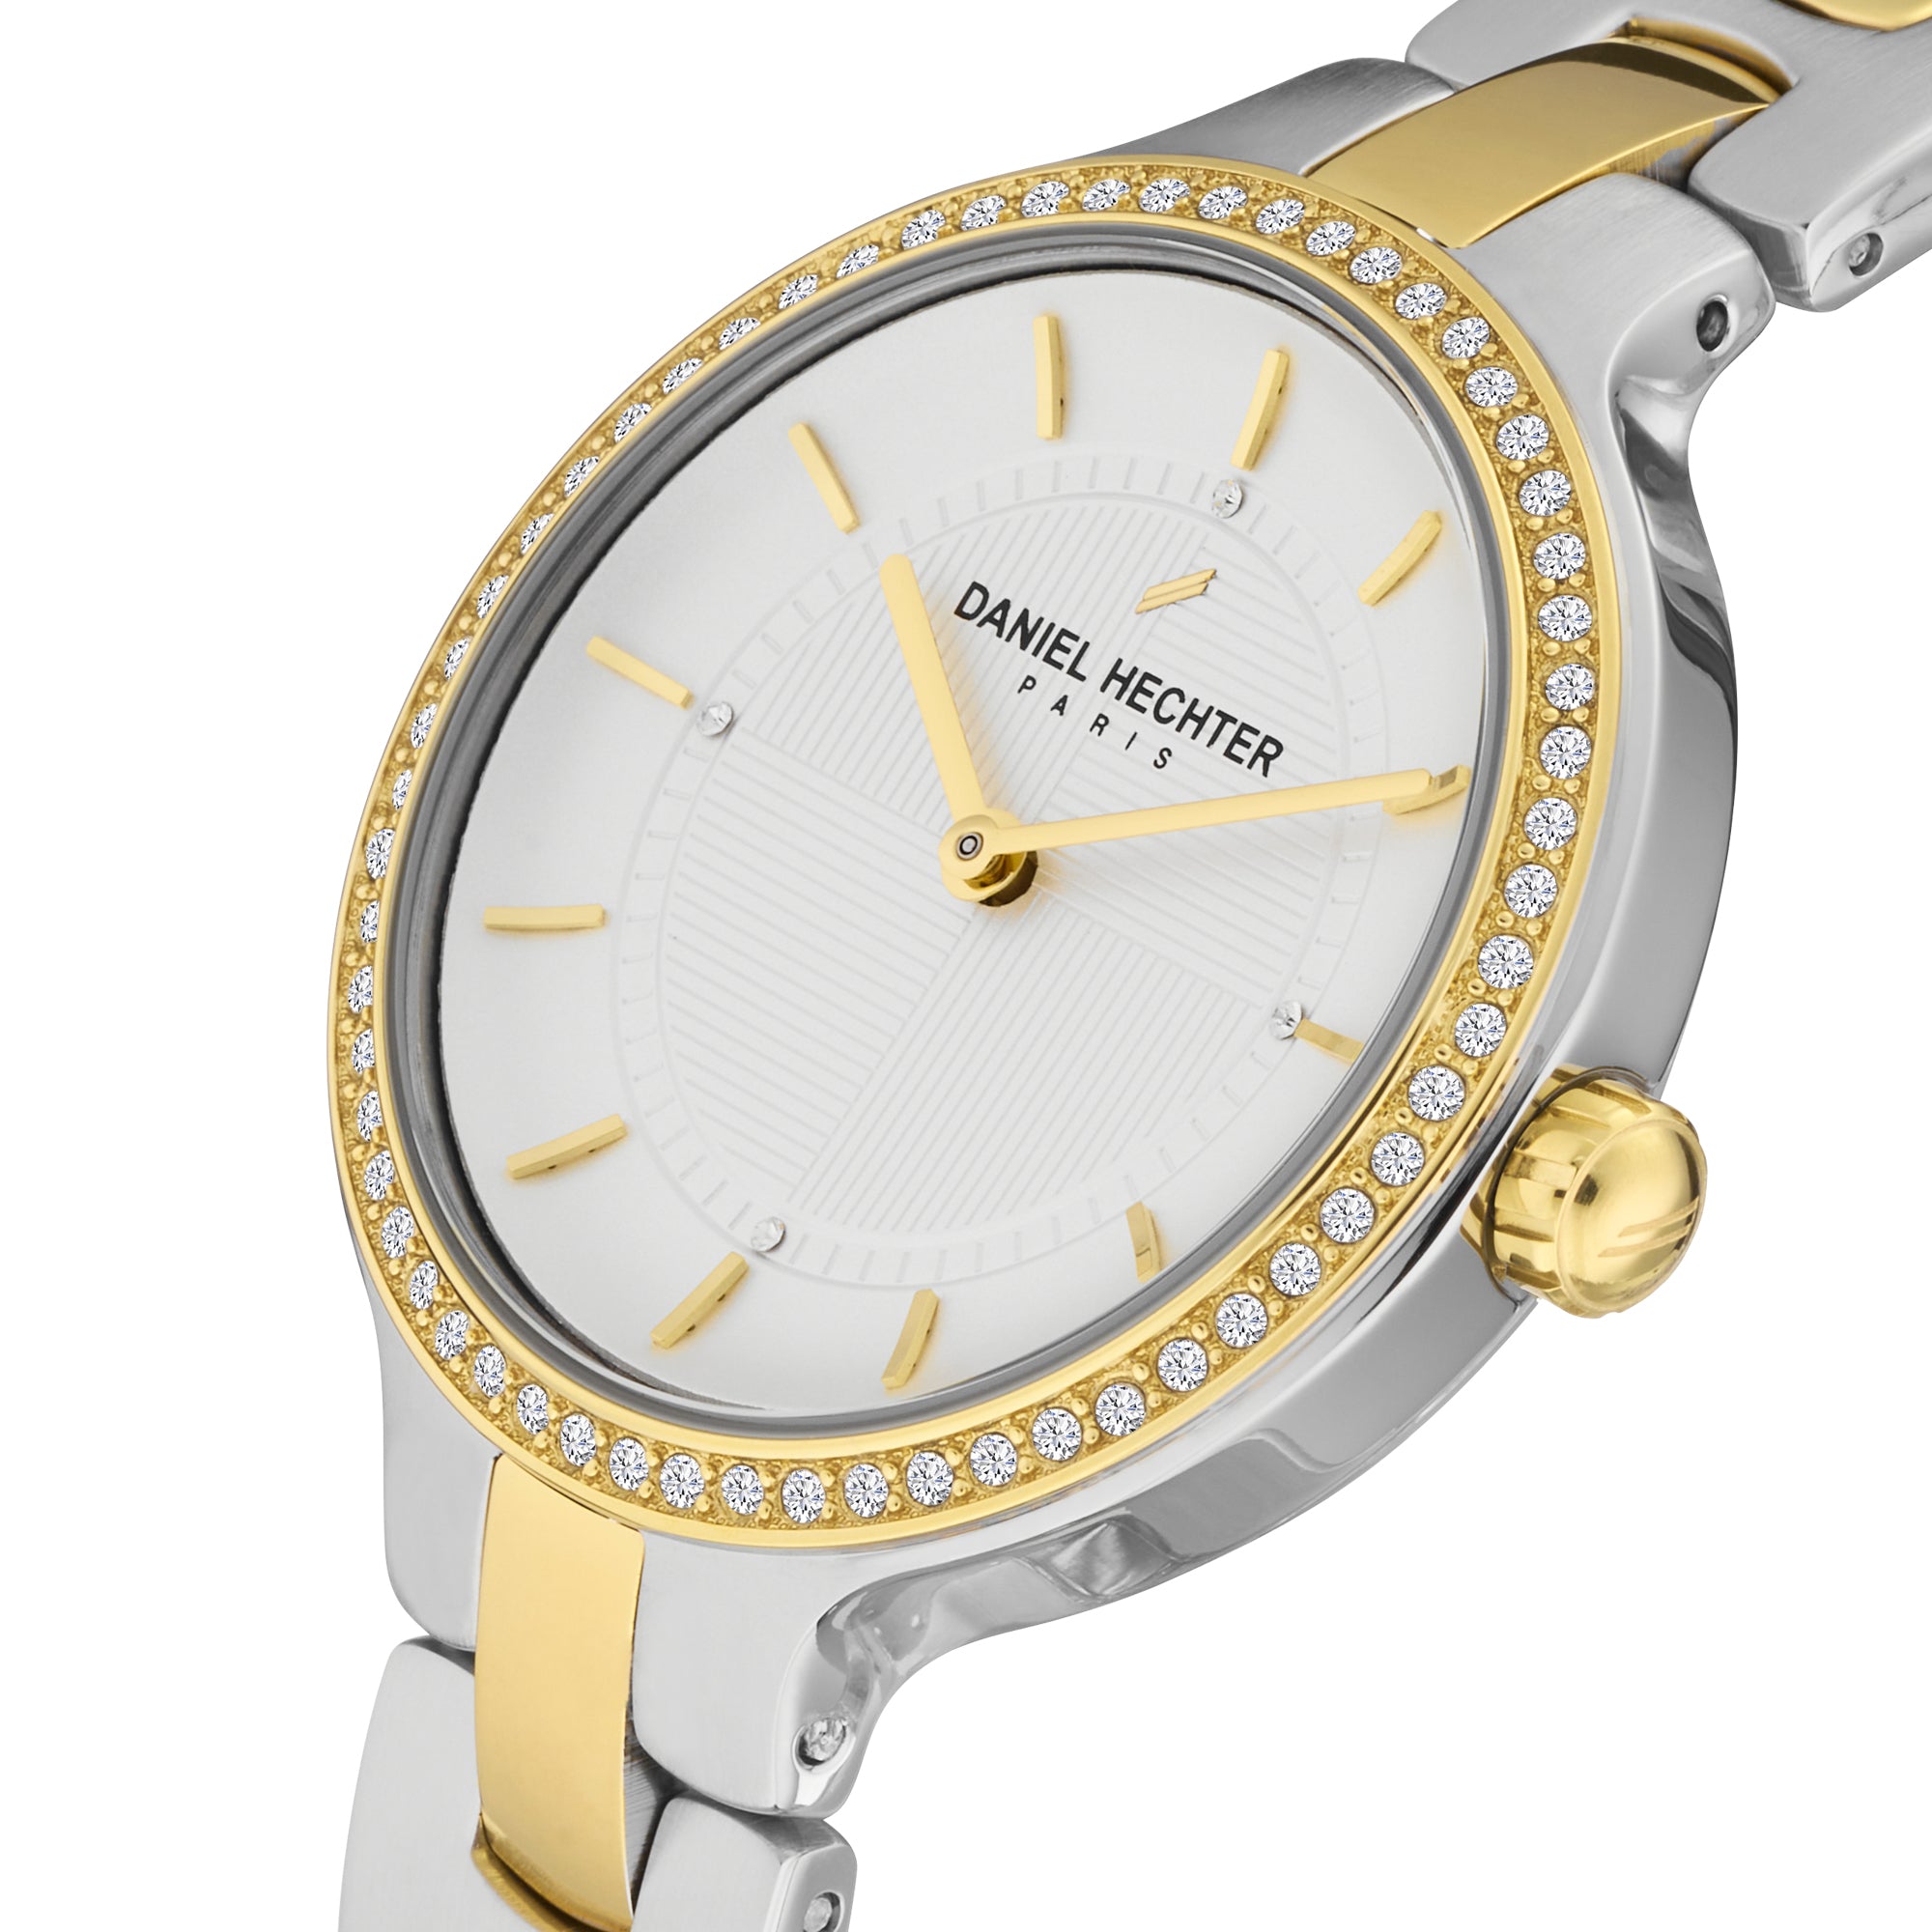 Buy Daniel Hechter Radiant Two Tone Watch Online